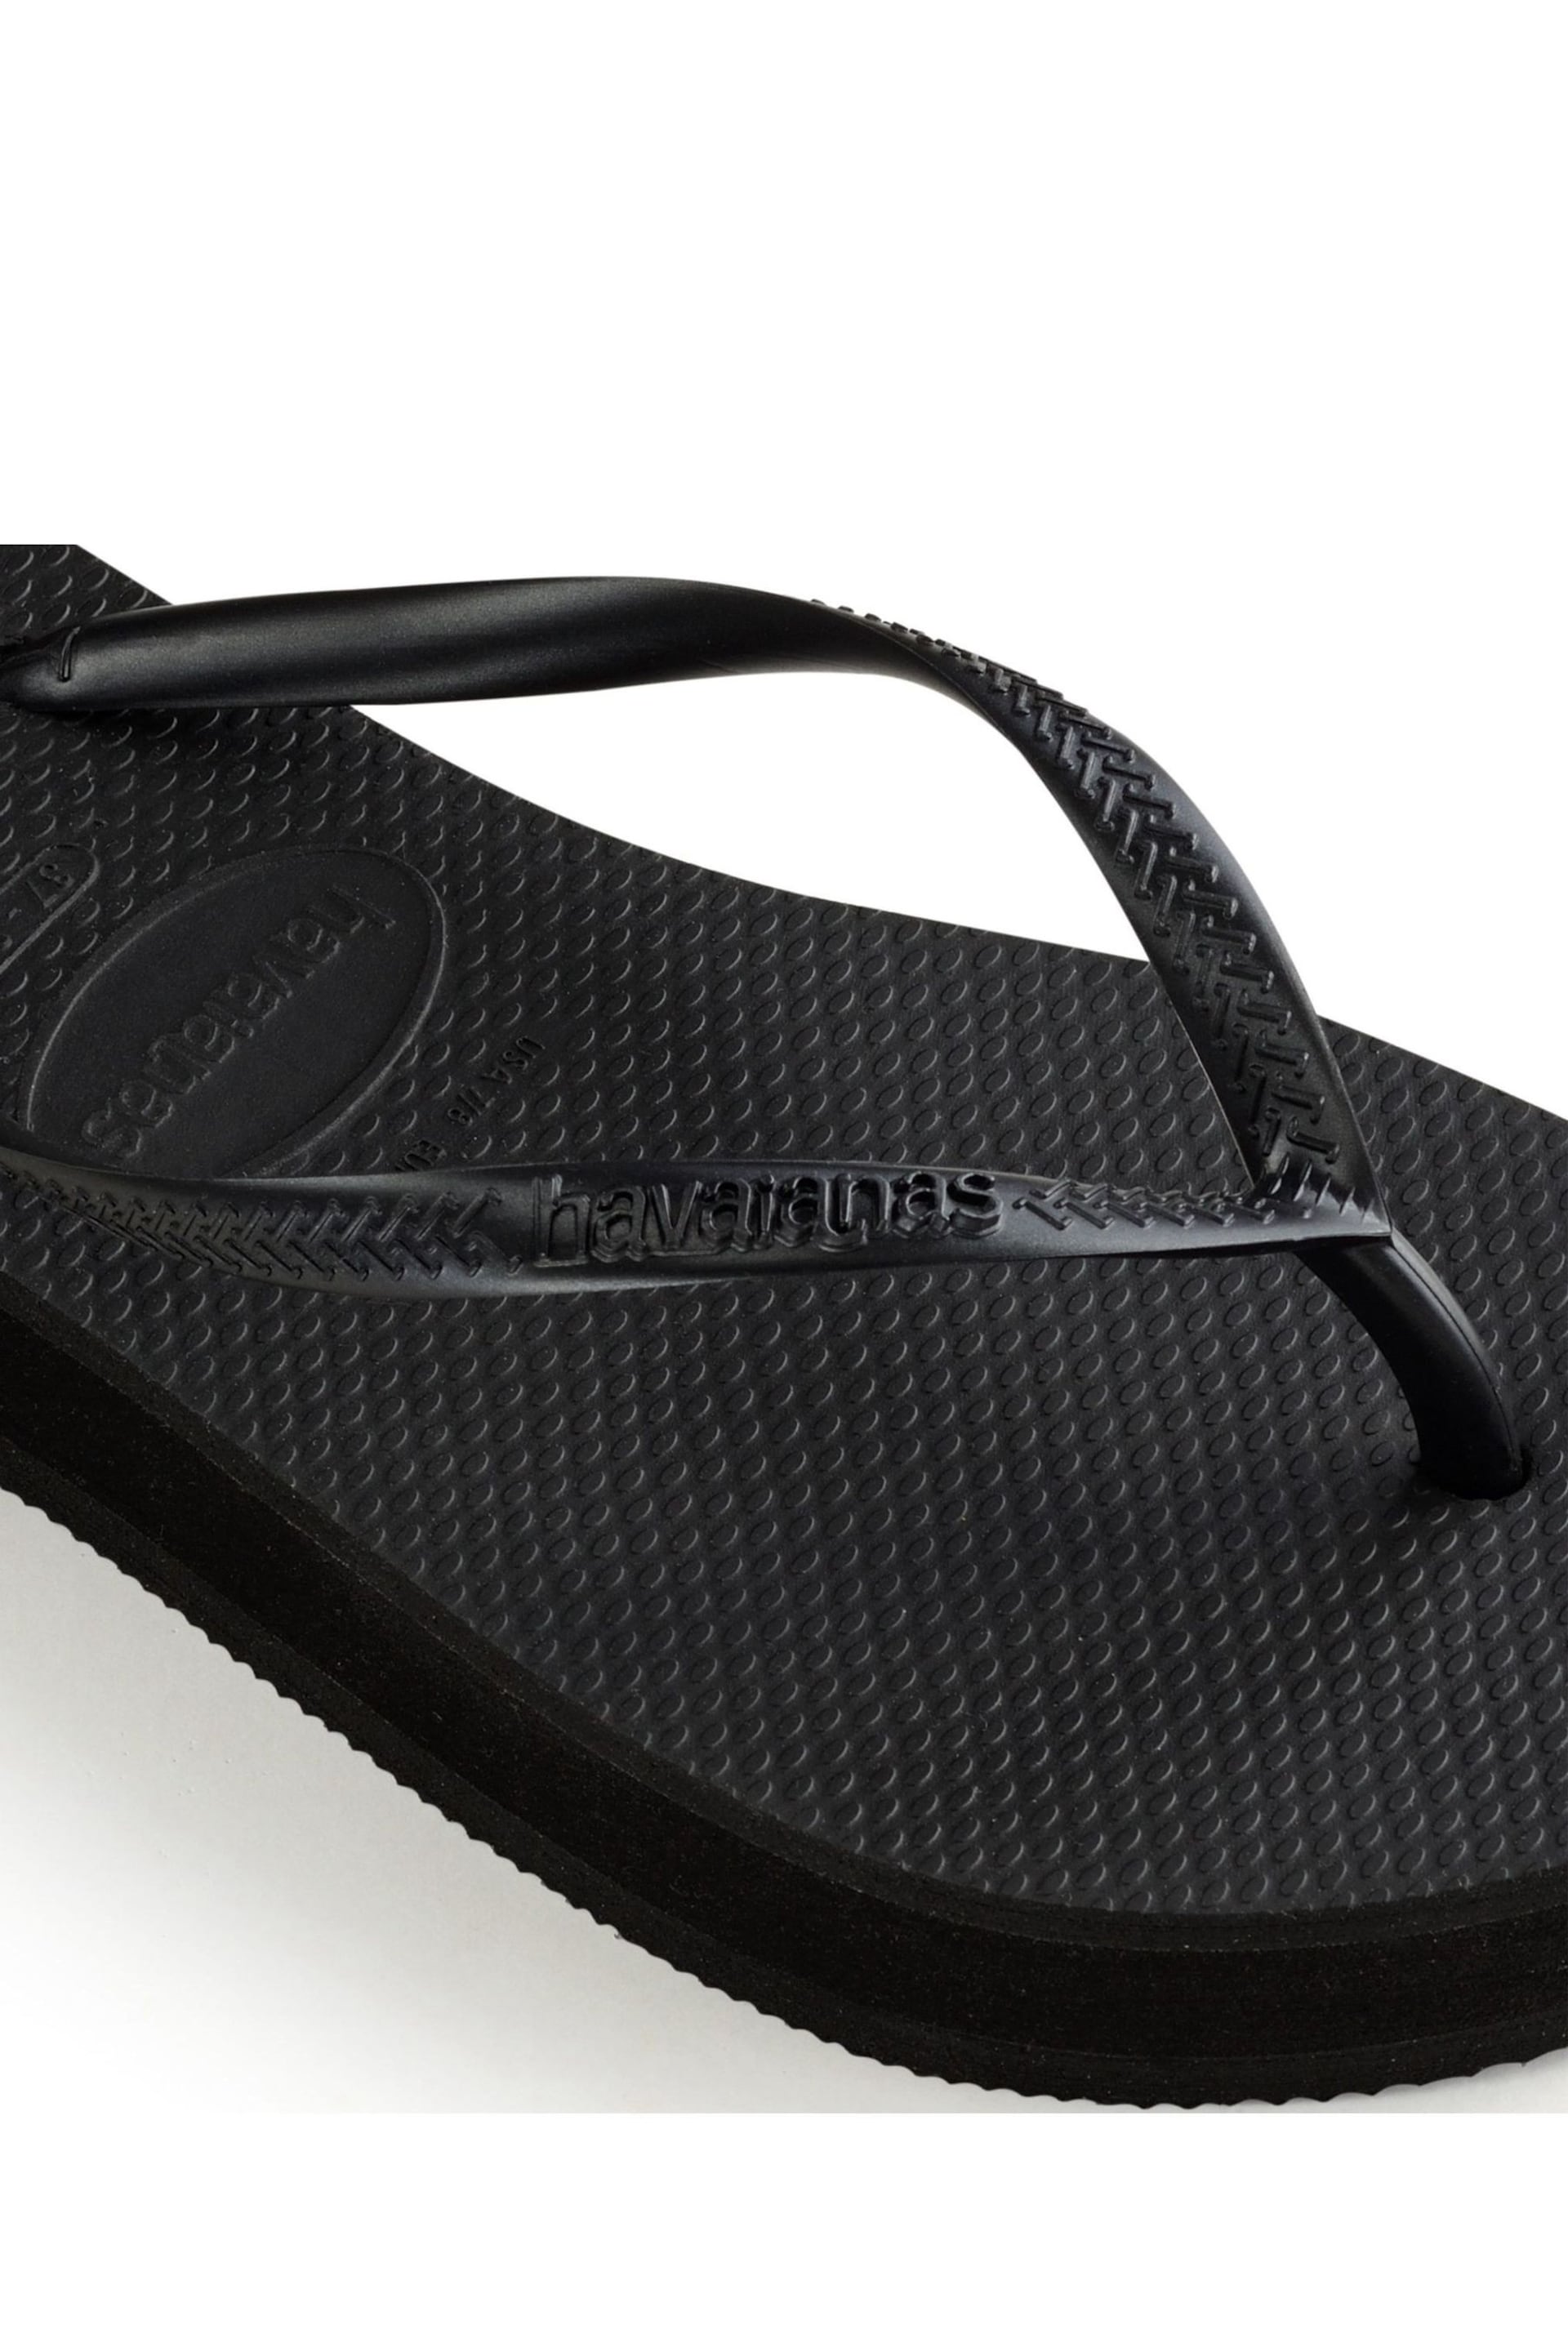 Havaianas Slim Flatform Sandals - Image 5 of 9